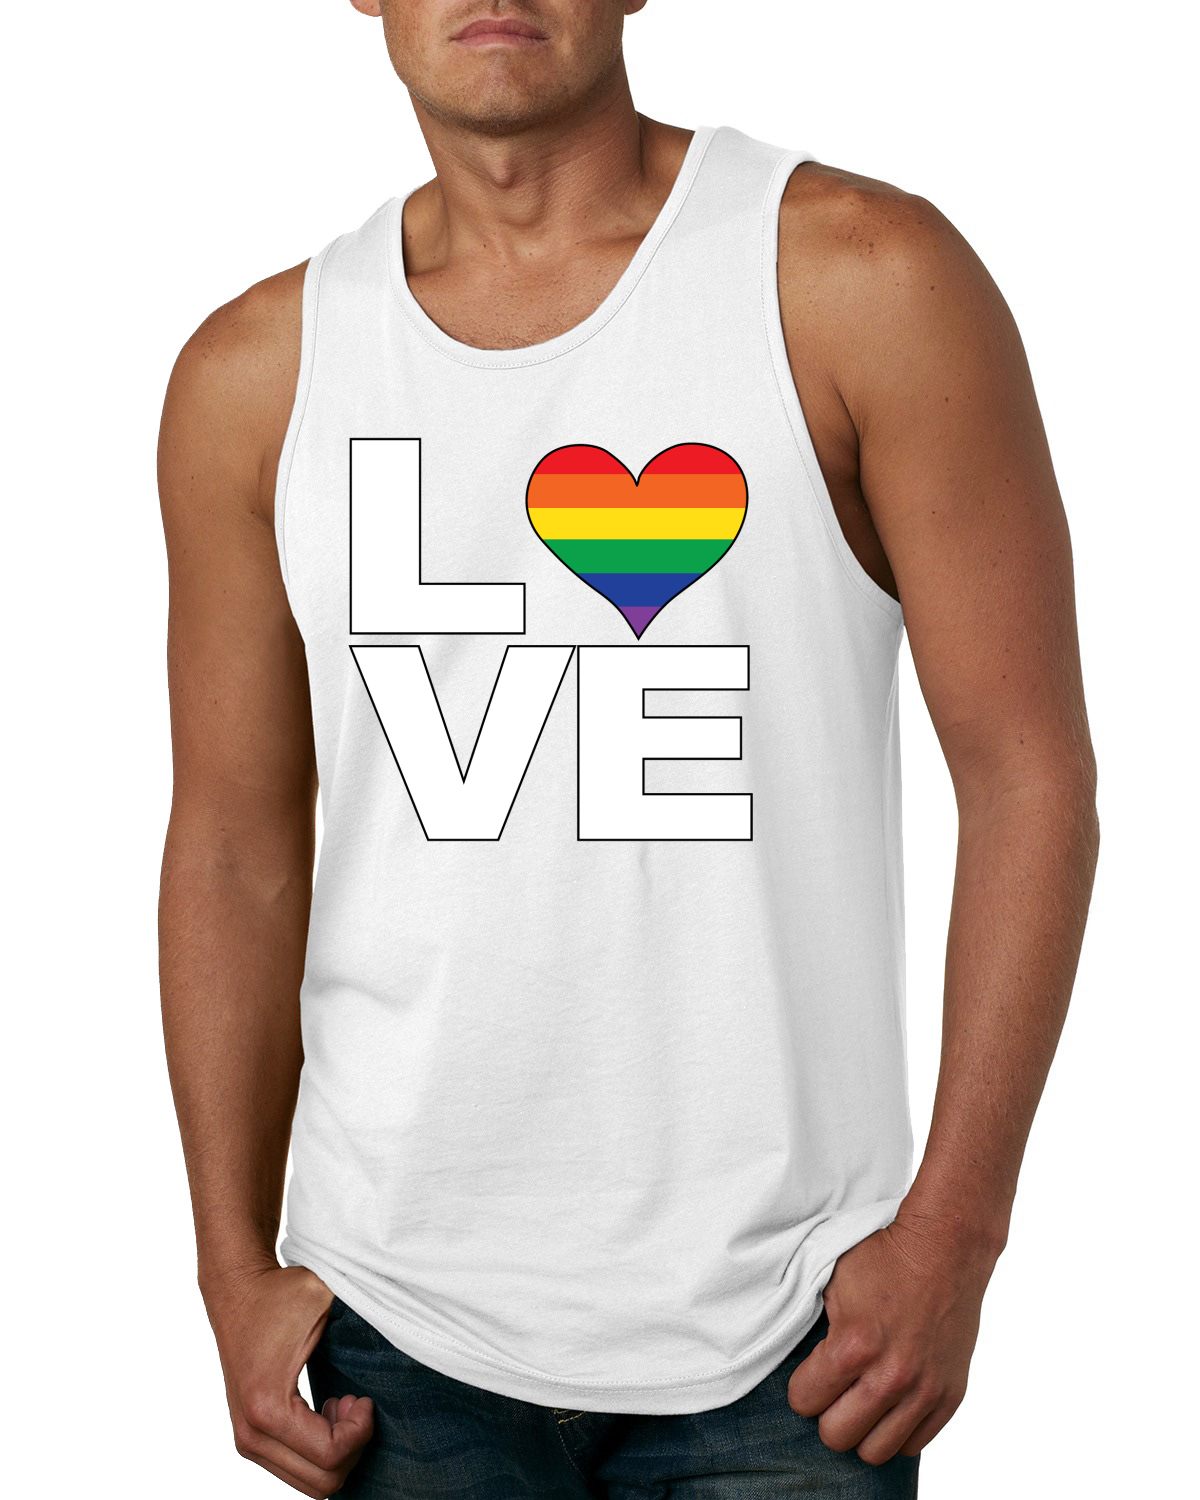 best gay pride shirts